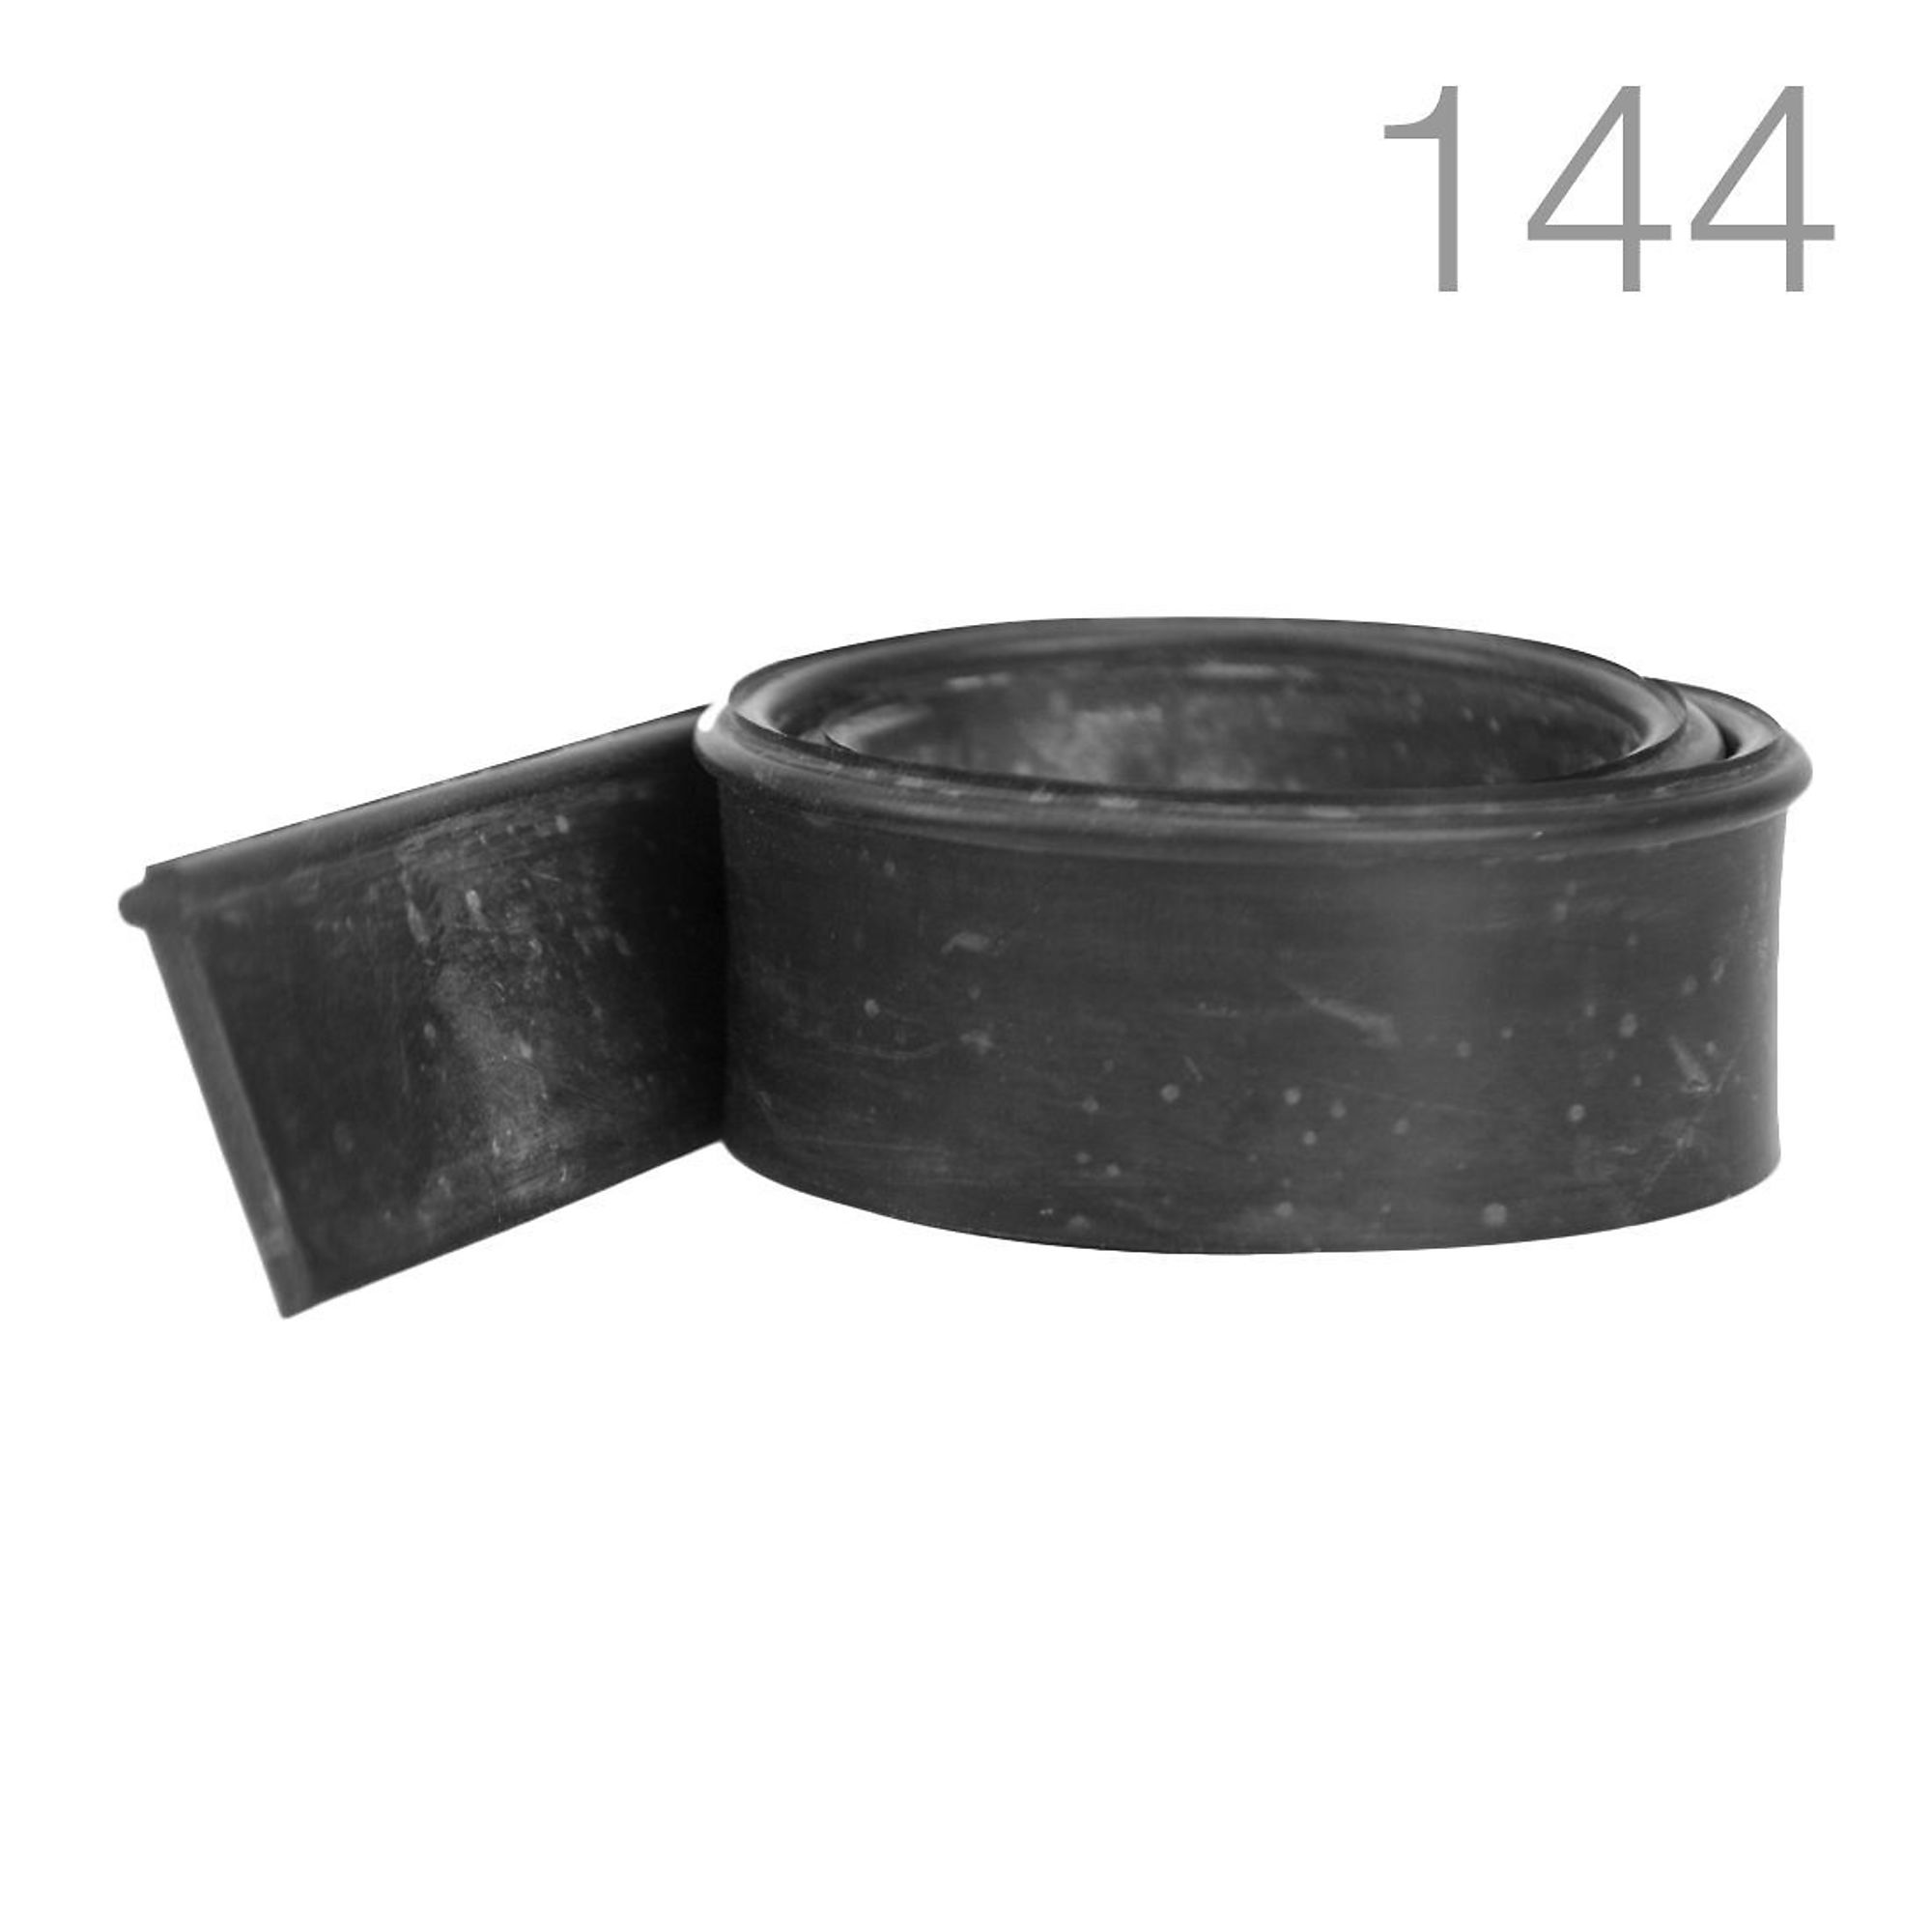 BlackDiamond, Flat Top Medium Squeegee Rubber Gross - 24Inch, Model 012-05-62